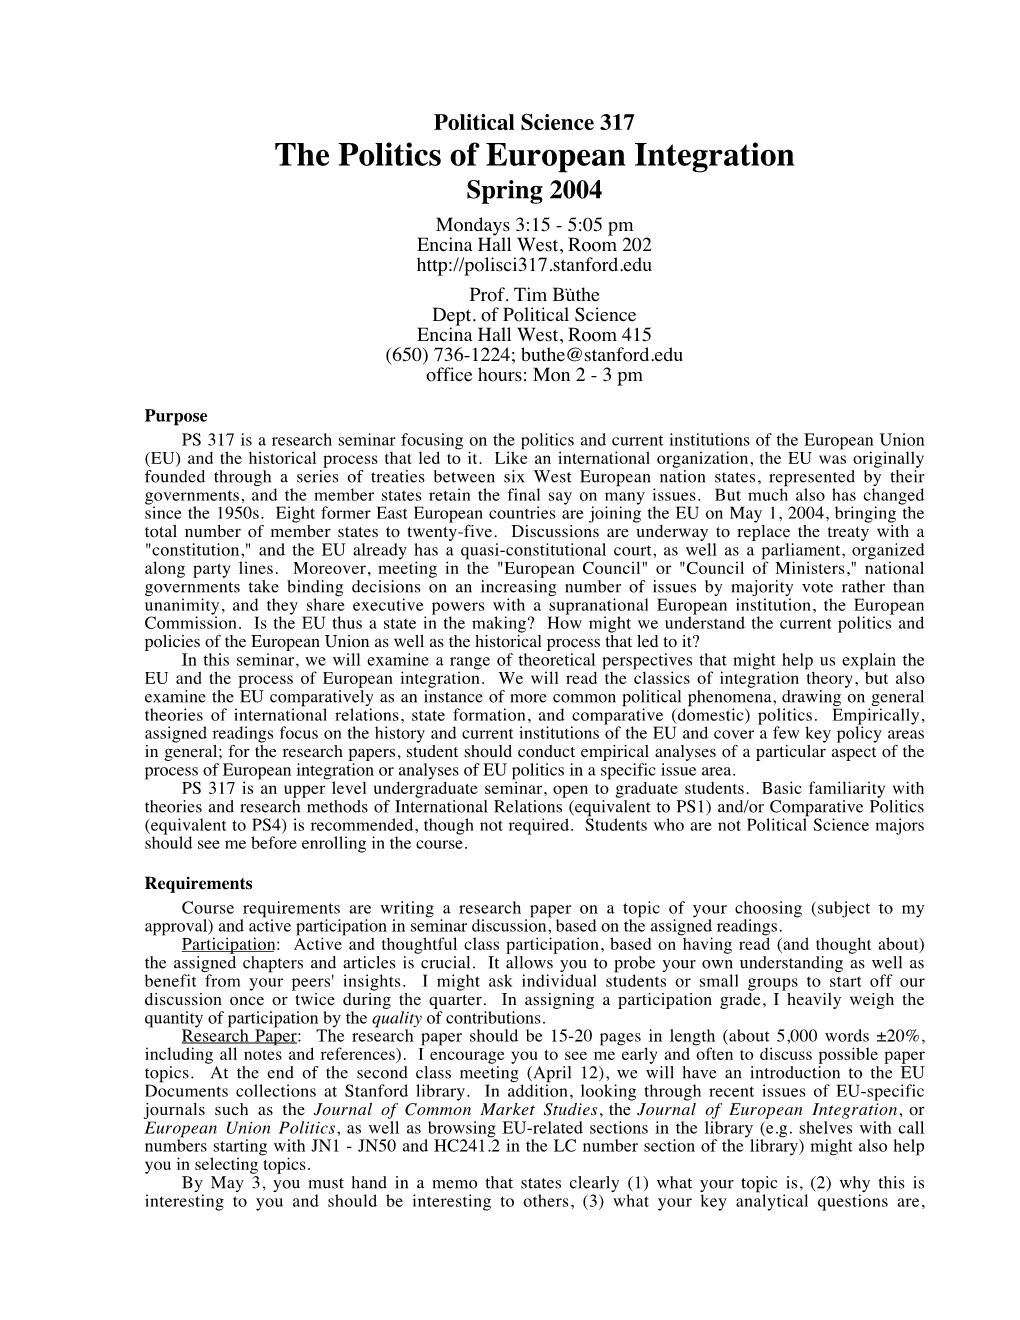 The Politics of European Integration Spring 2004 Mondays 3:15 - 5:05 Pm Encina Hall West, Room 202 Prof